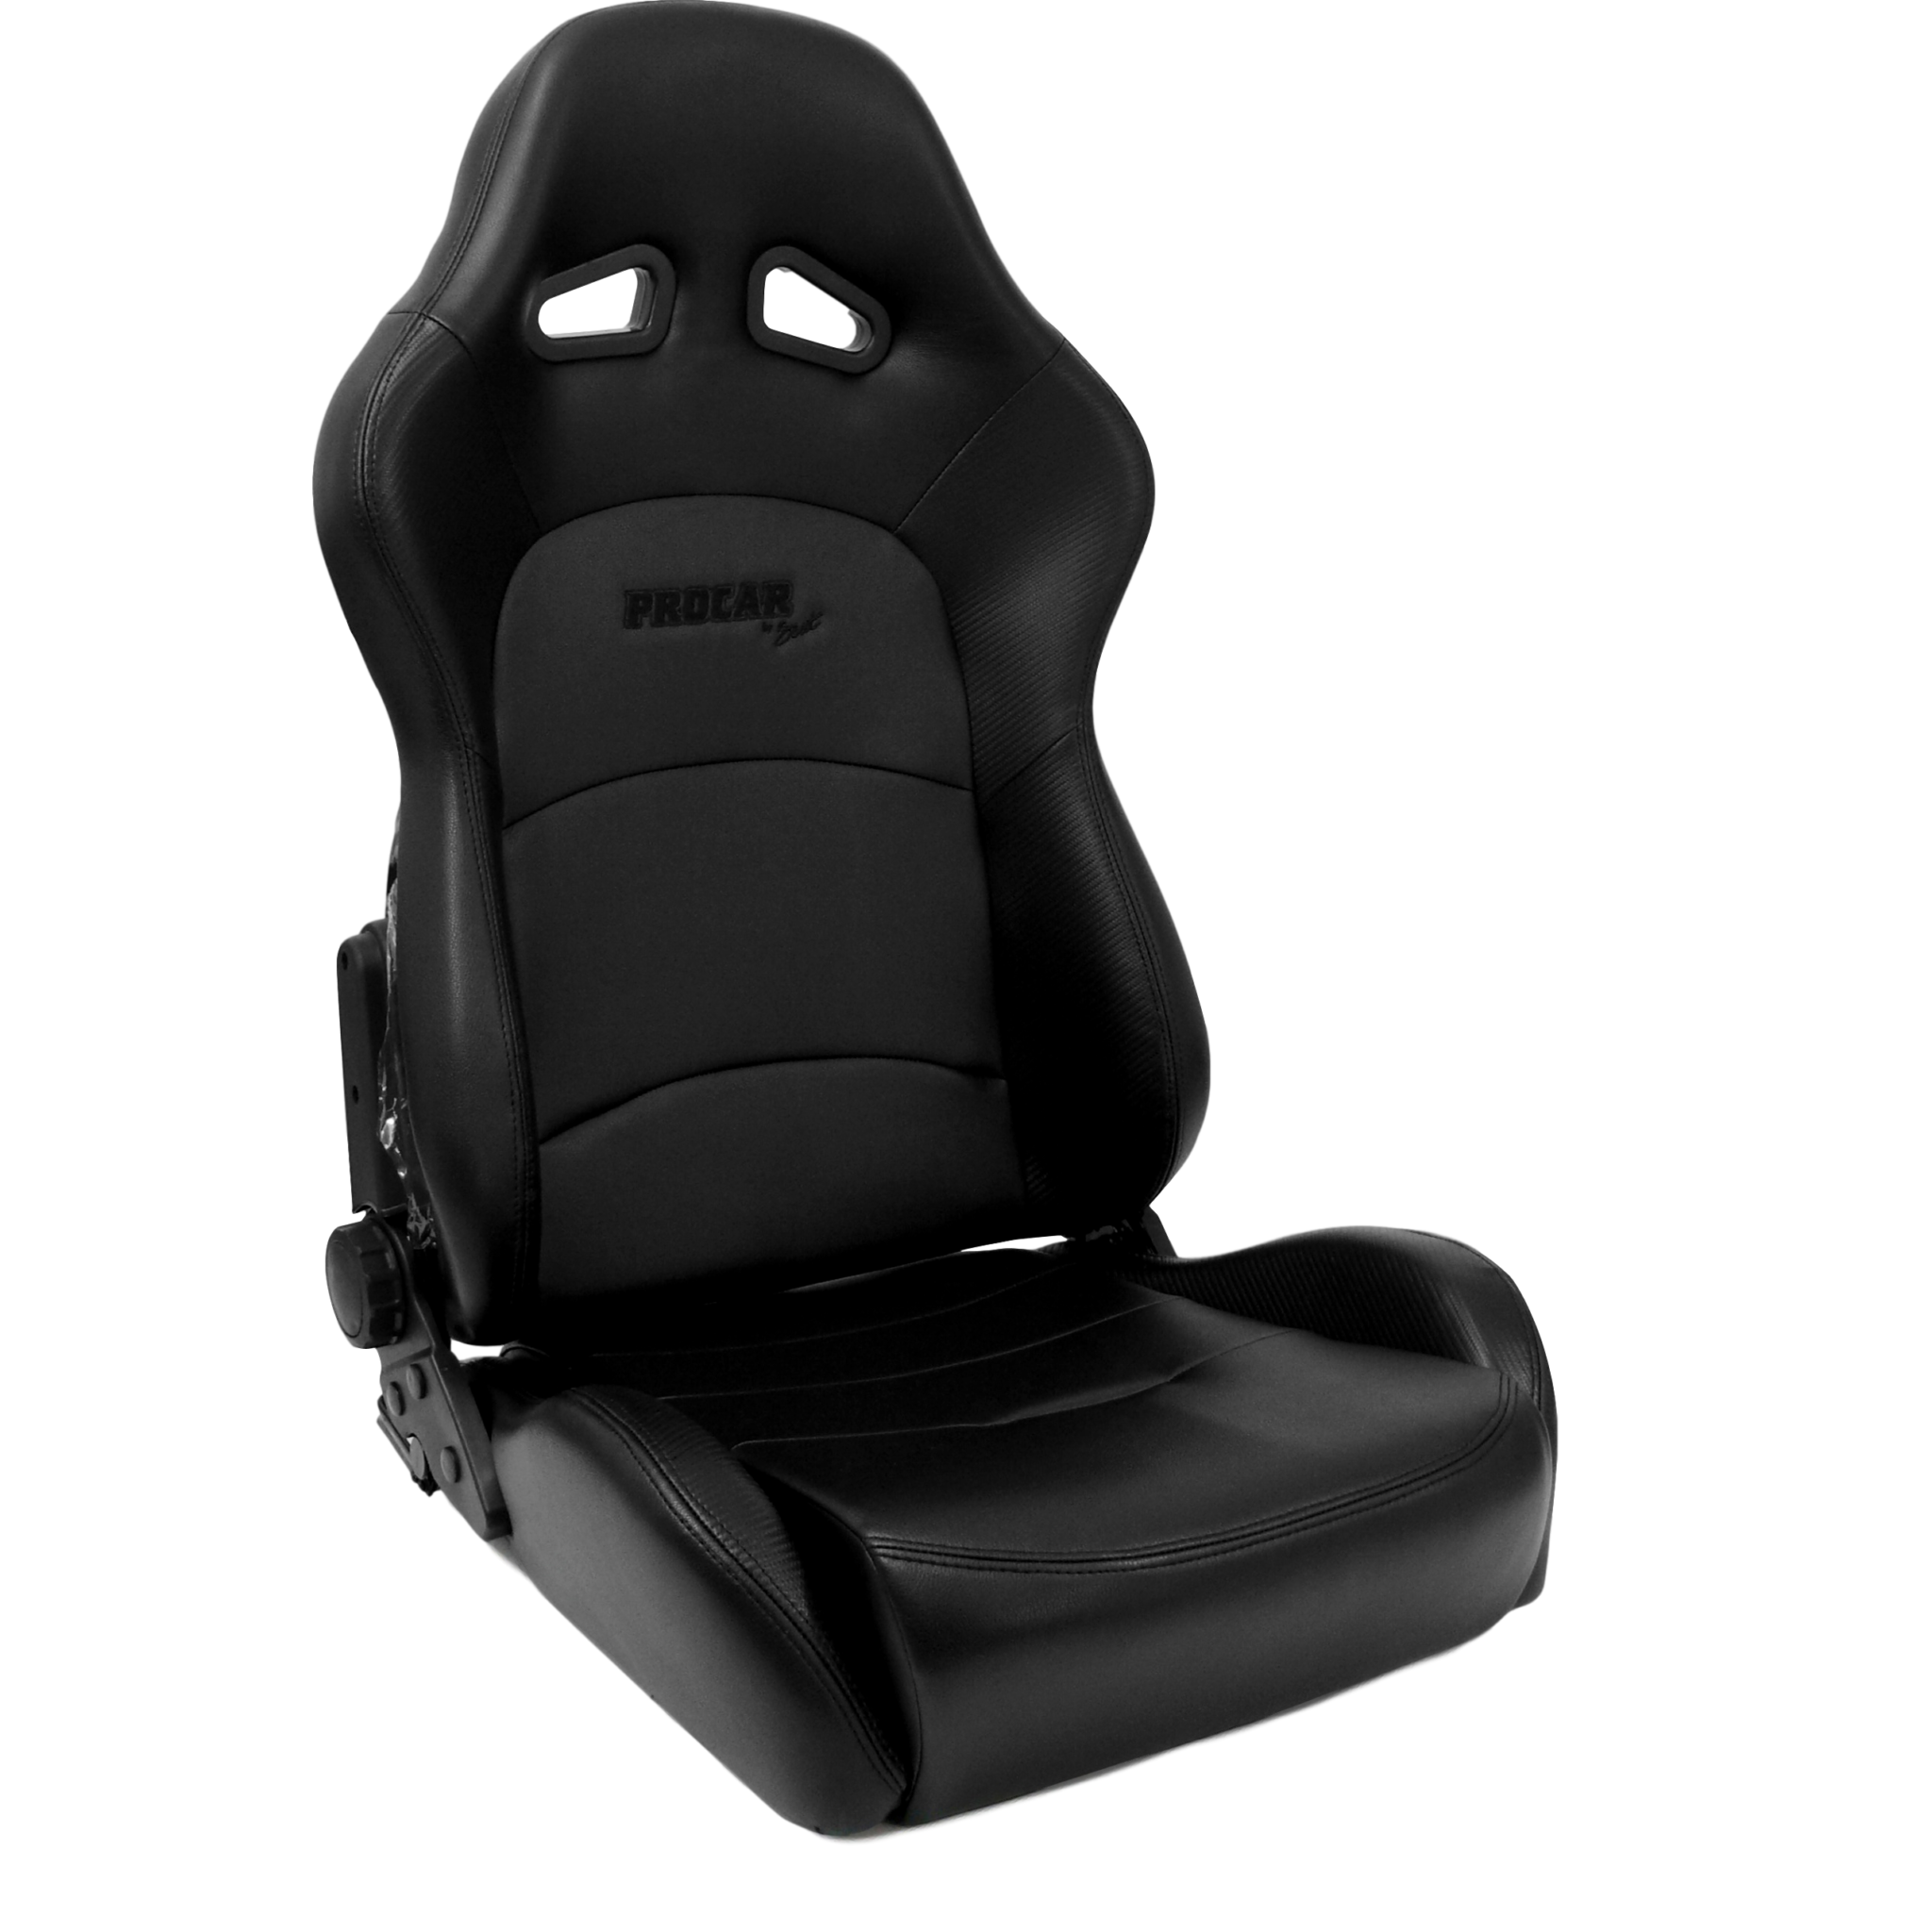 ProCar by Scat 80-1615-51 Black Vinyl Racing Sportsman Pro Recliner Common Seat 